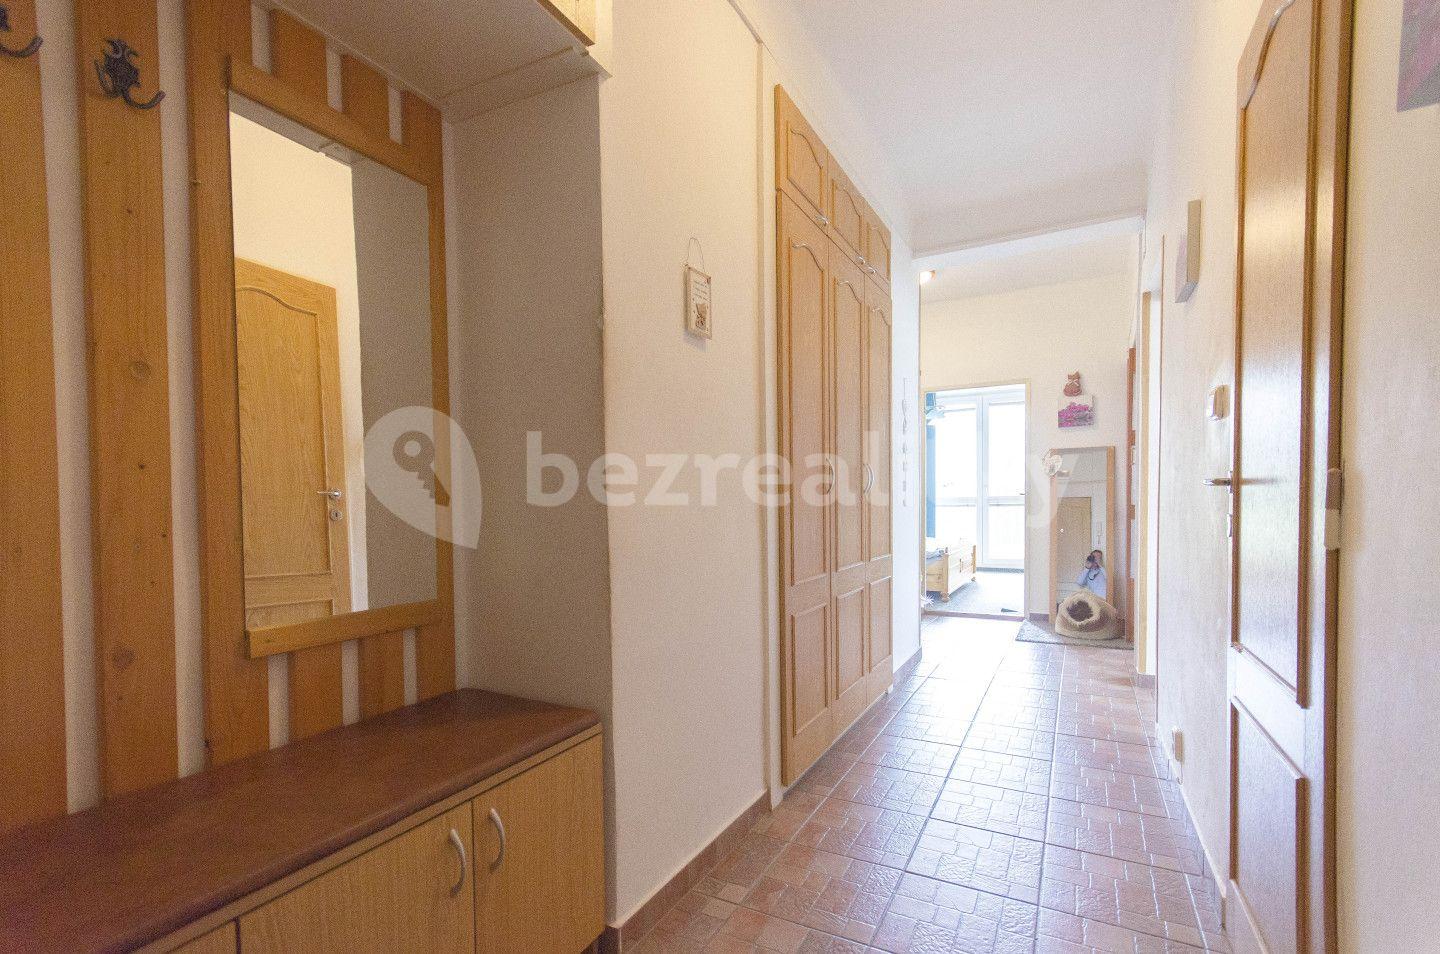 3 bedroom flat for sale, 80 m², Nad Stadionem, Vrbno pod Pradědem, Moravskoslezský Region